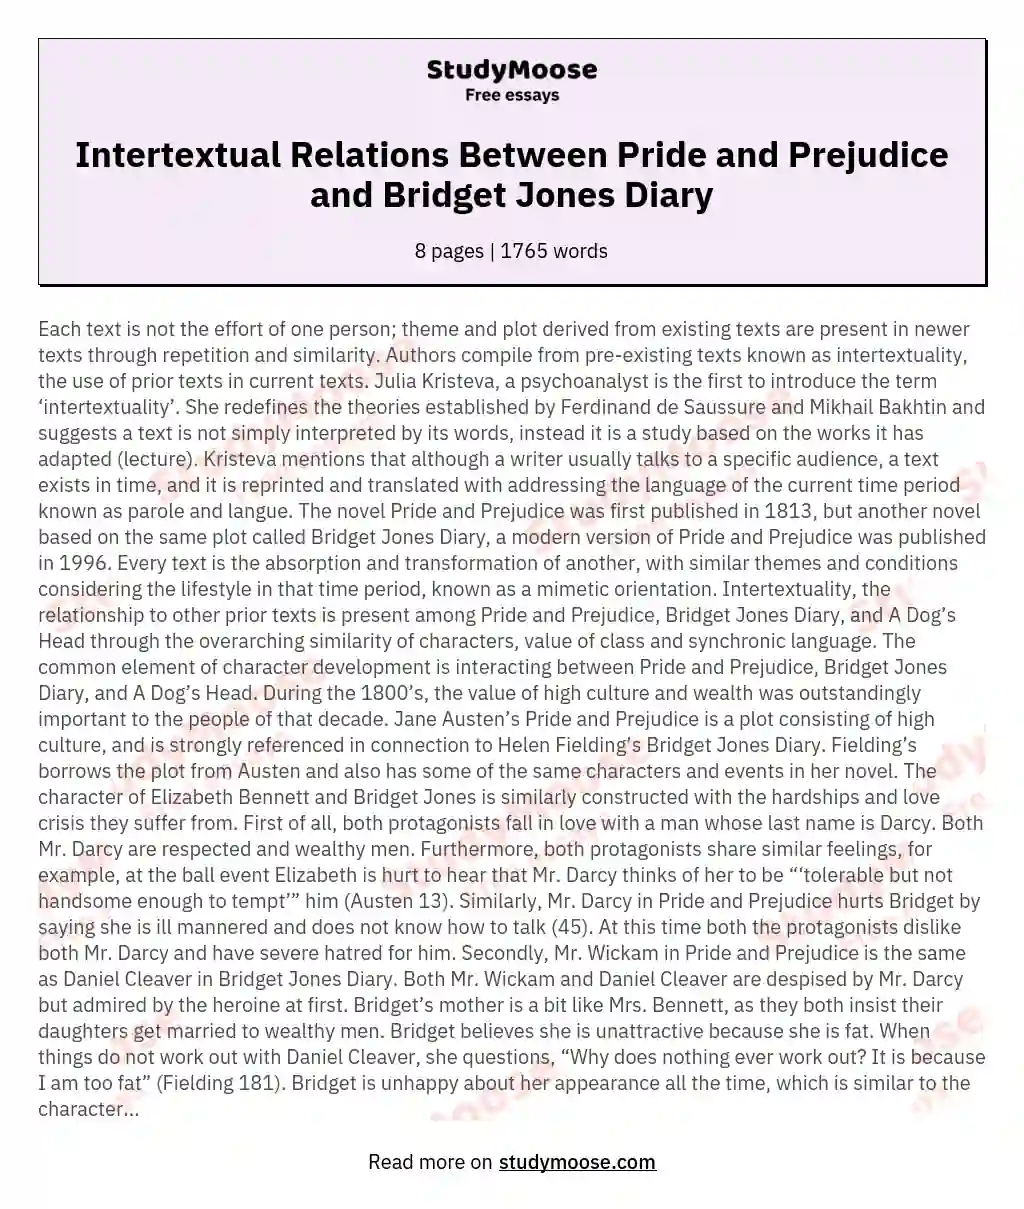 Intertextual Relations Between Pride and Prejudice and Bridget Jones Diary essay